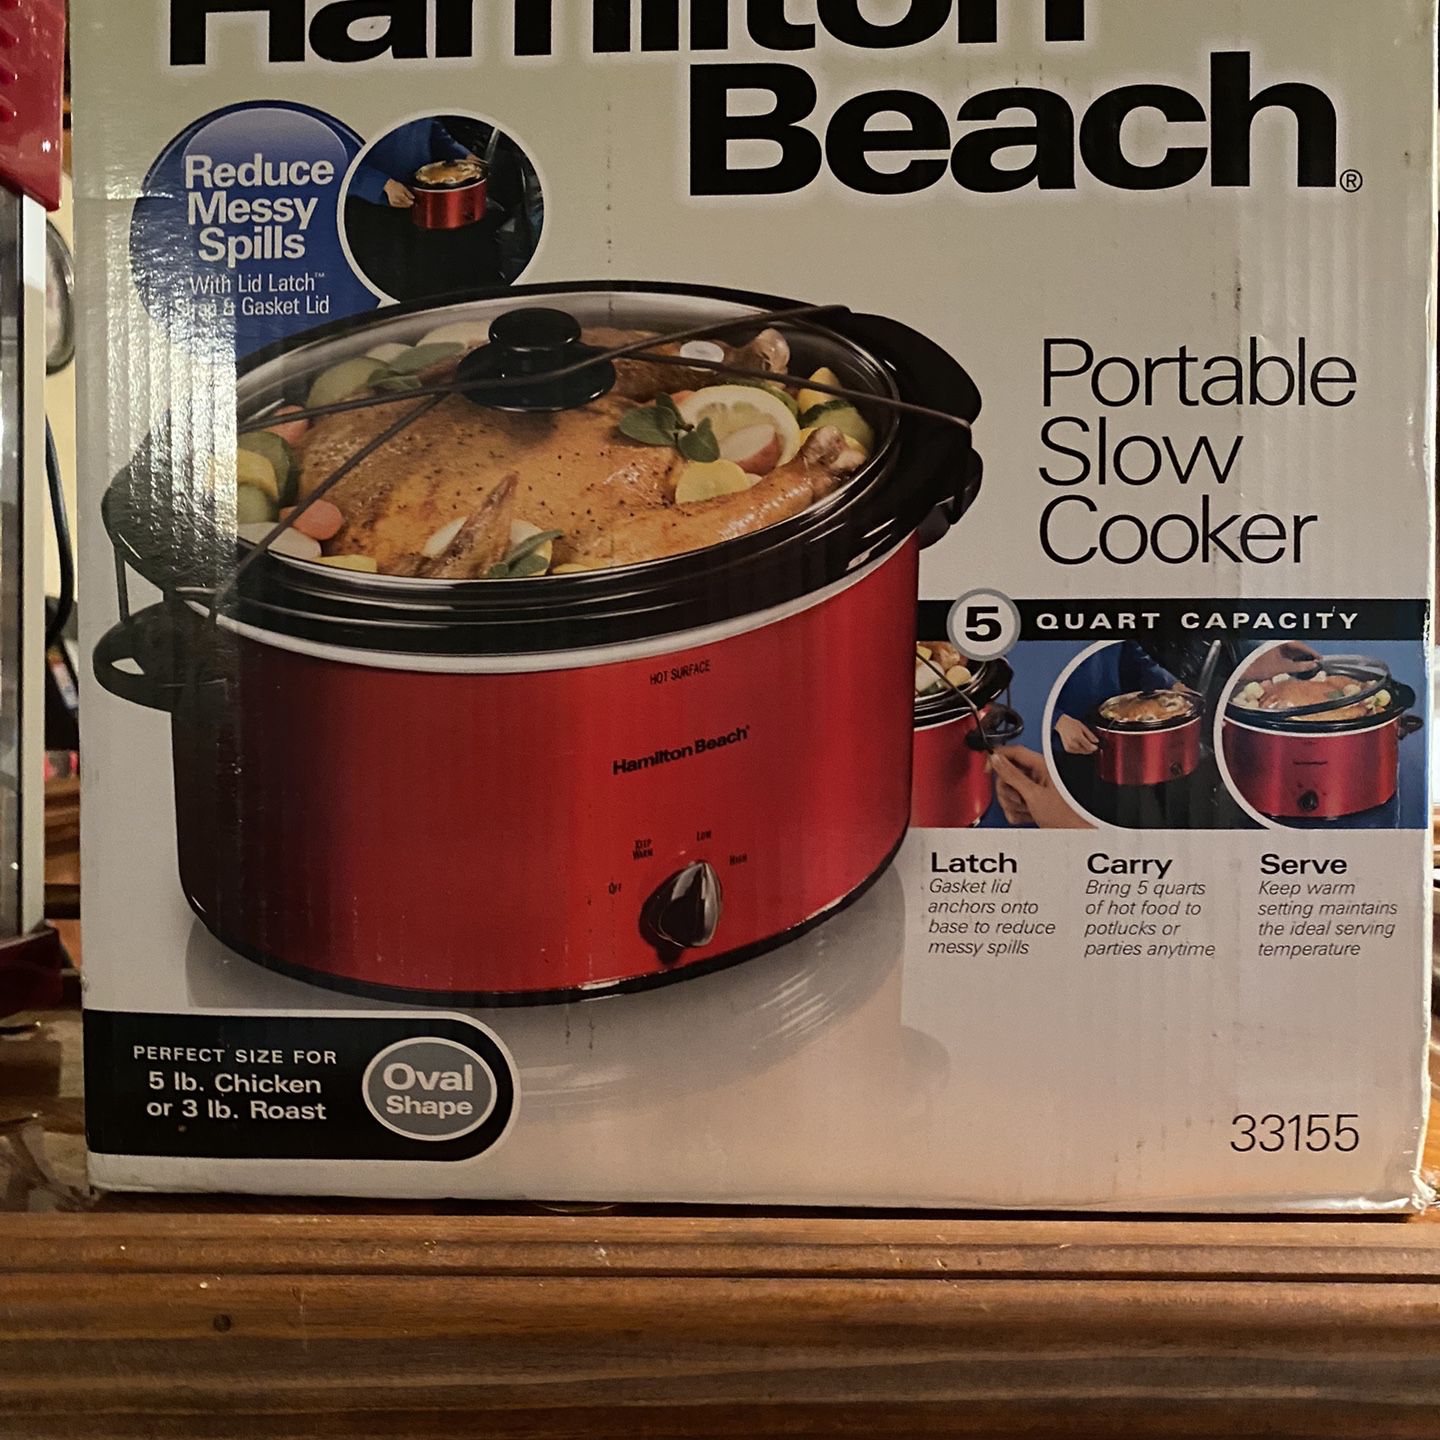 Red Hamilton Beach 5 Qt. Portable Slow Cooker 33155 (Brand New)